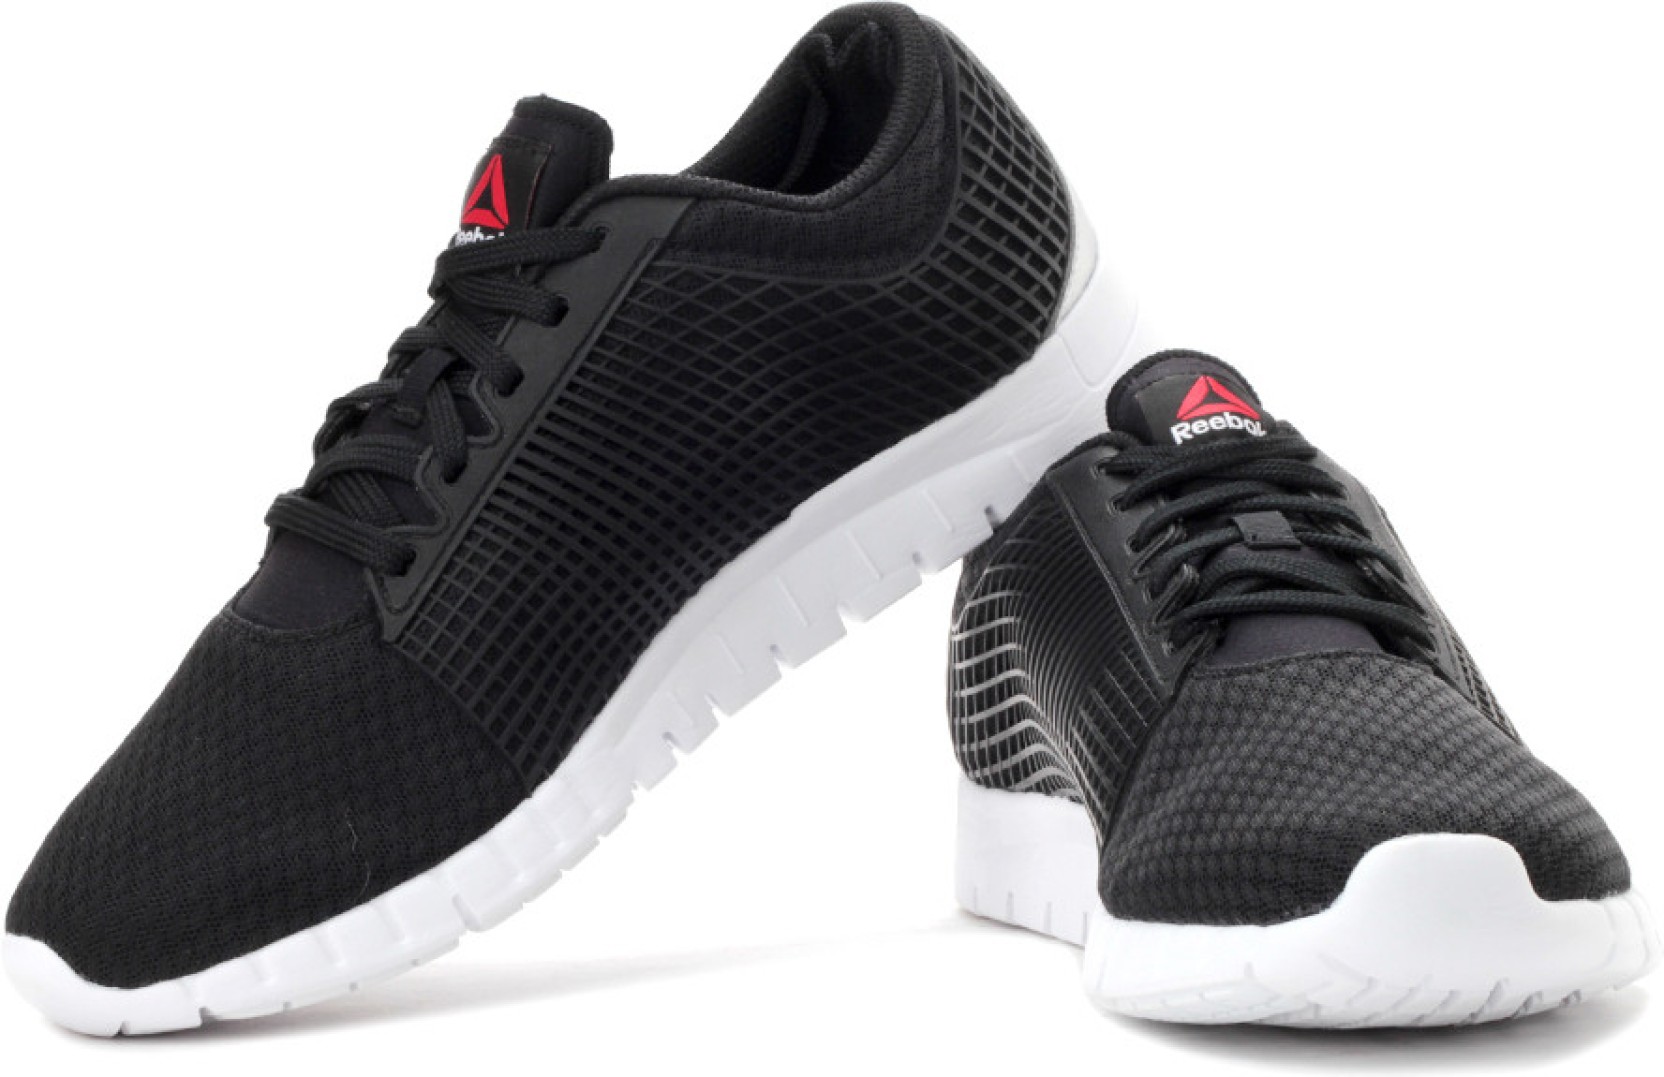 Reebok Z Run Running Shoes - Buy Black Color Reebok Z Run Running Shoes ...